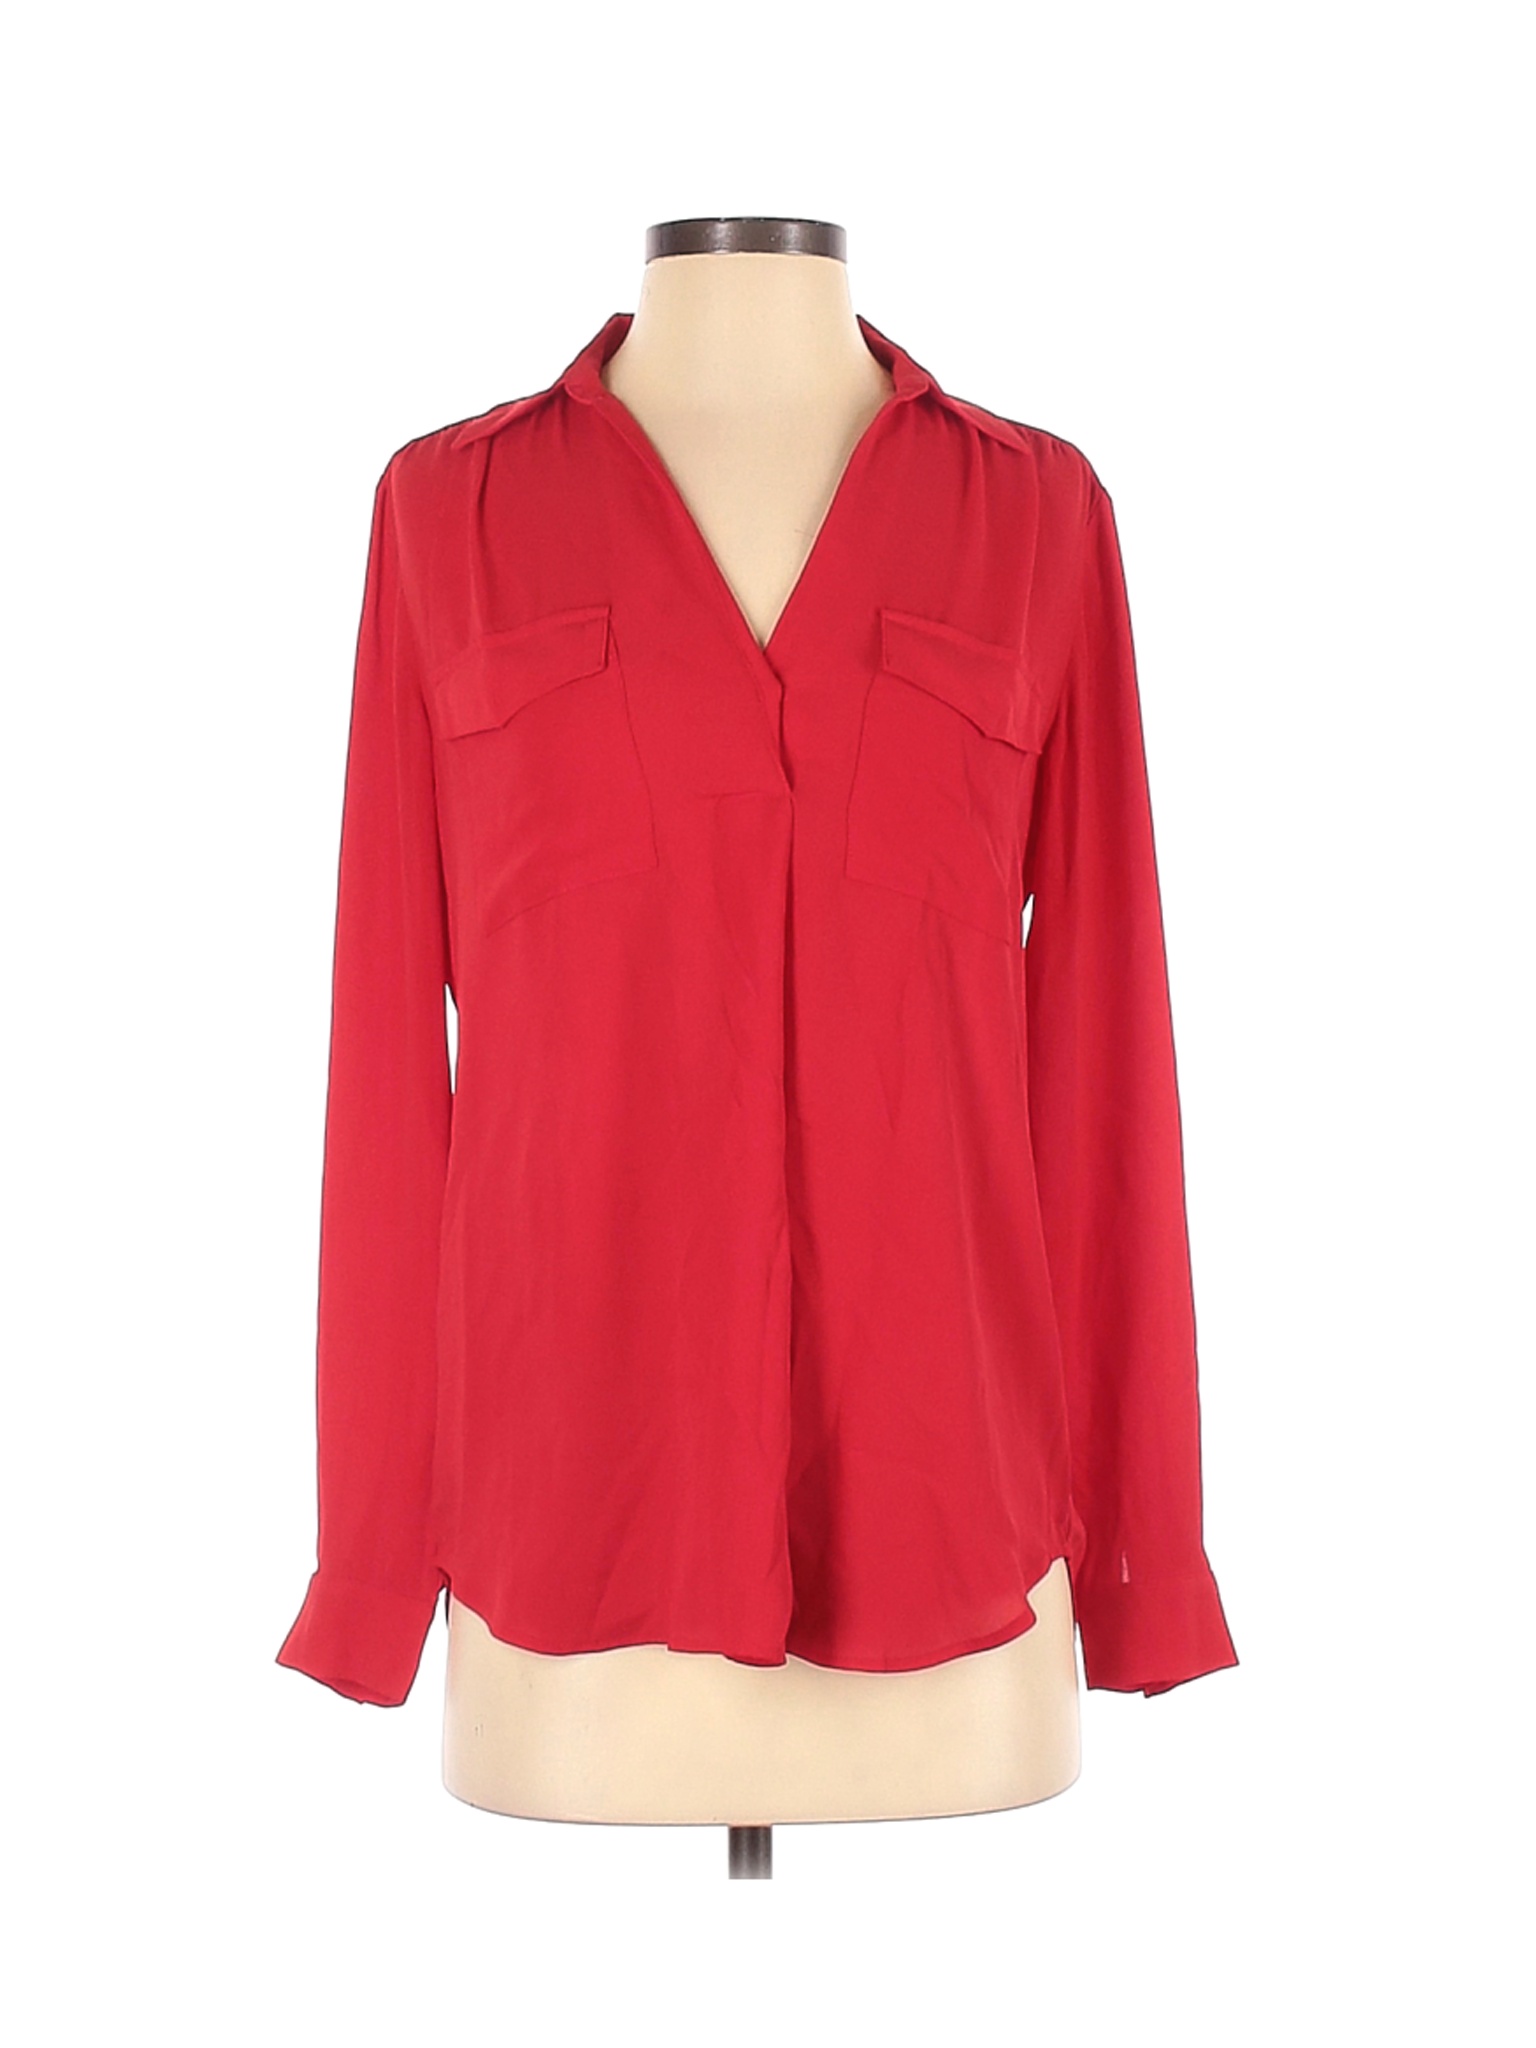 Ann Taylor Women Red Long Sleeve Blouse XS | eBay